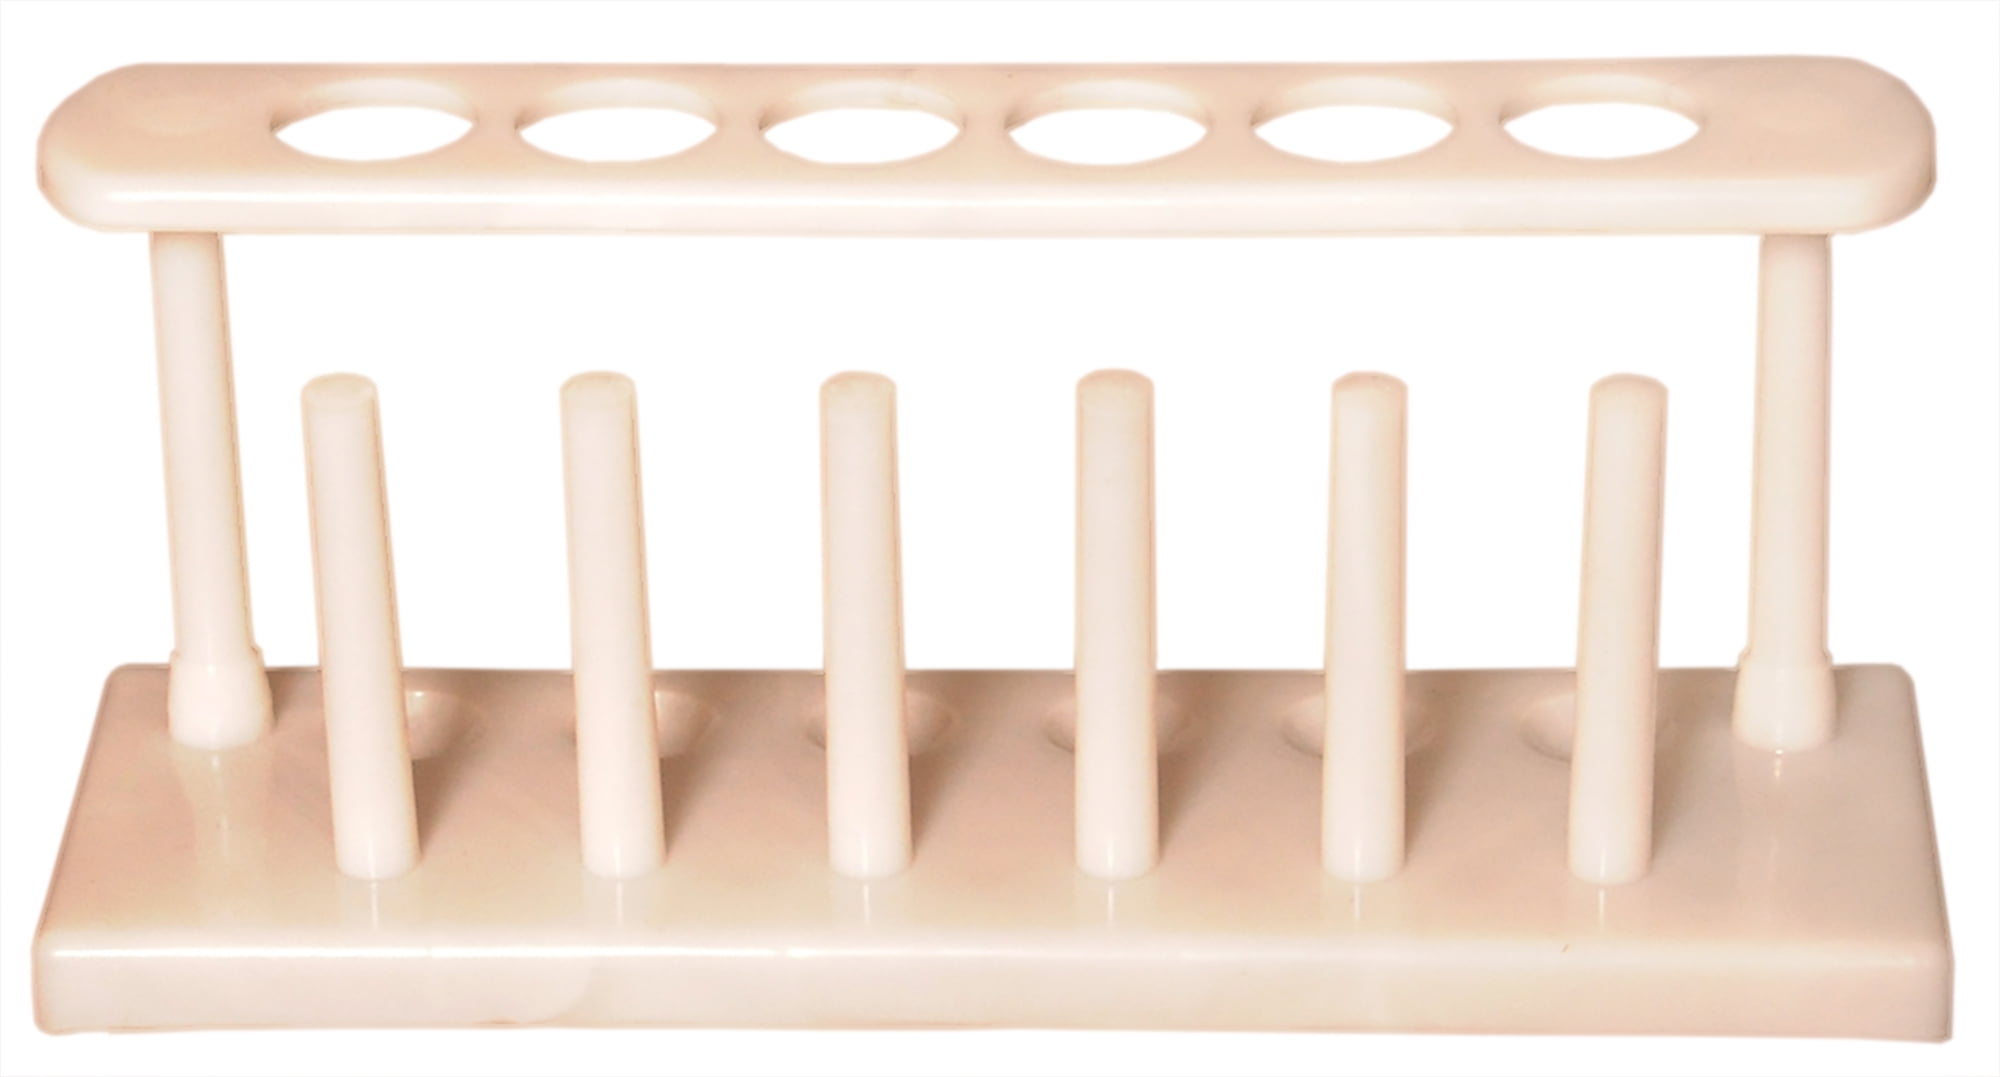 16mm Diameter American Educational Plastic Test Tube Rack 8 Holes